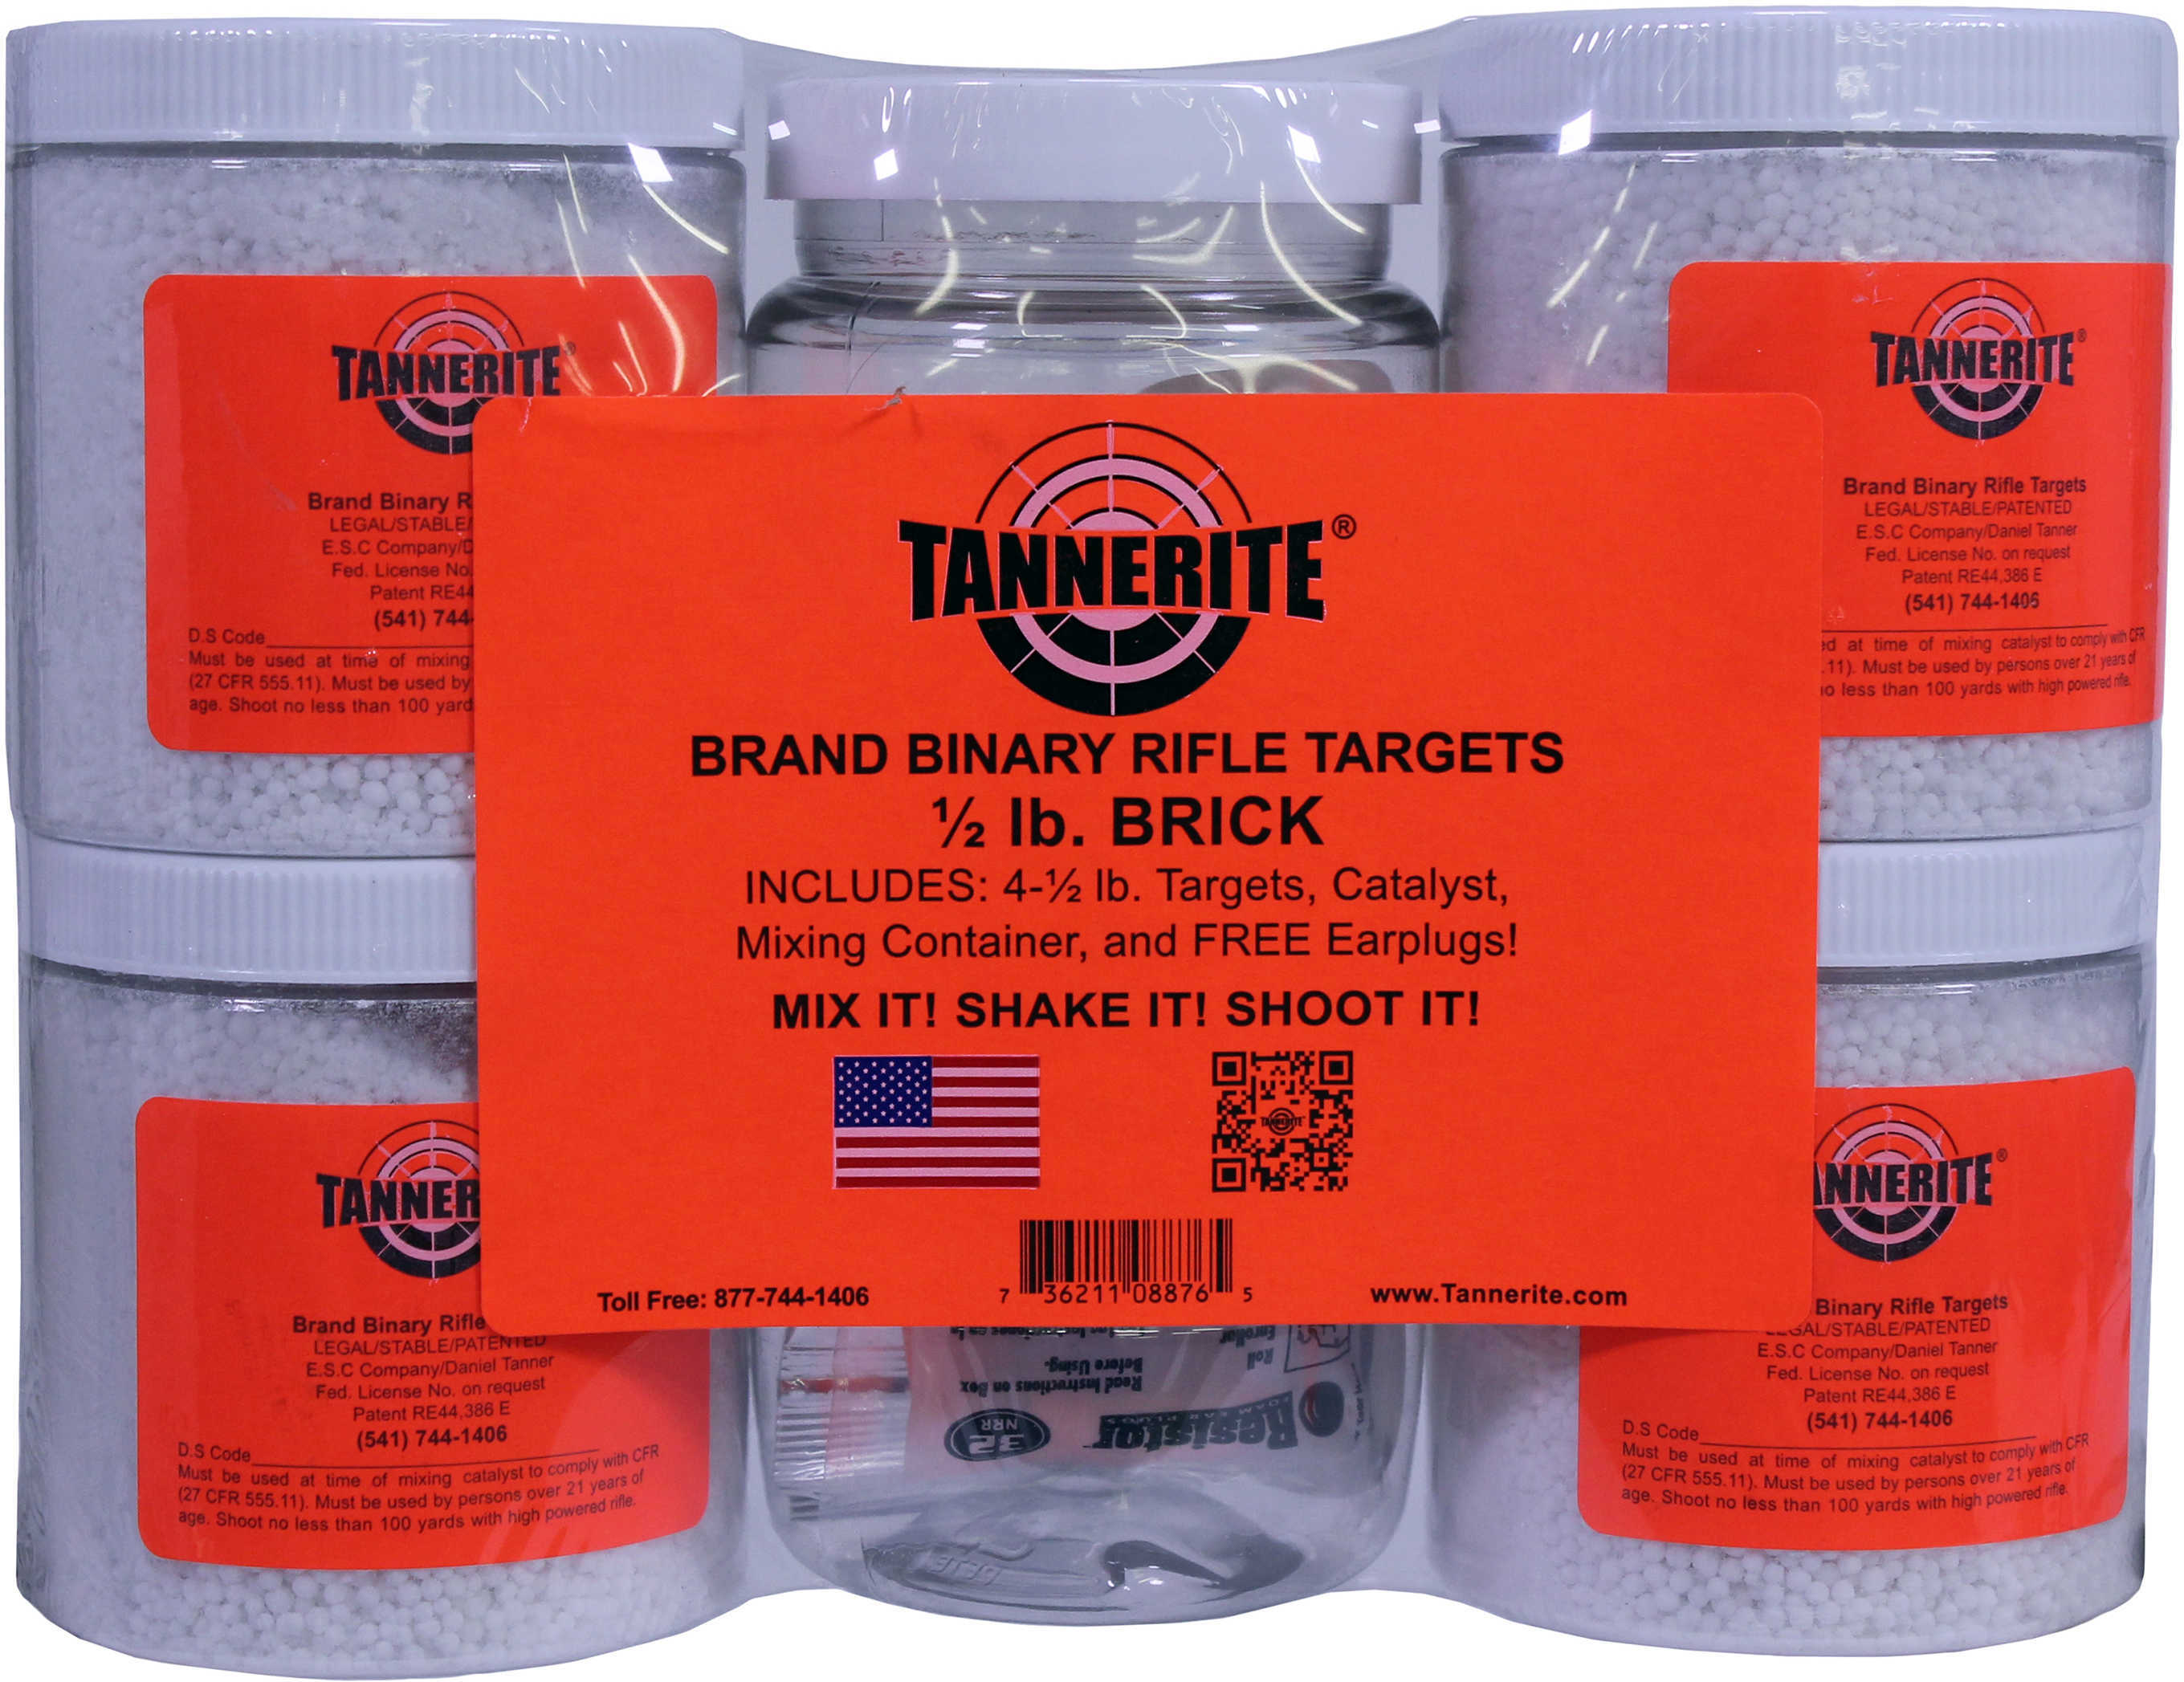 Tannerite 1/2Br Exploding Target Single1/2 Lb 16 Case